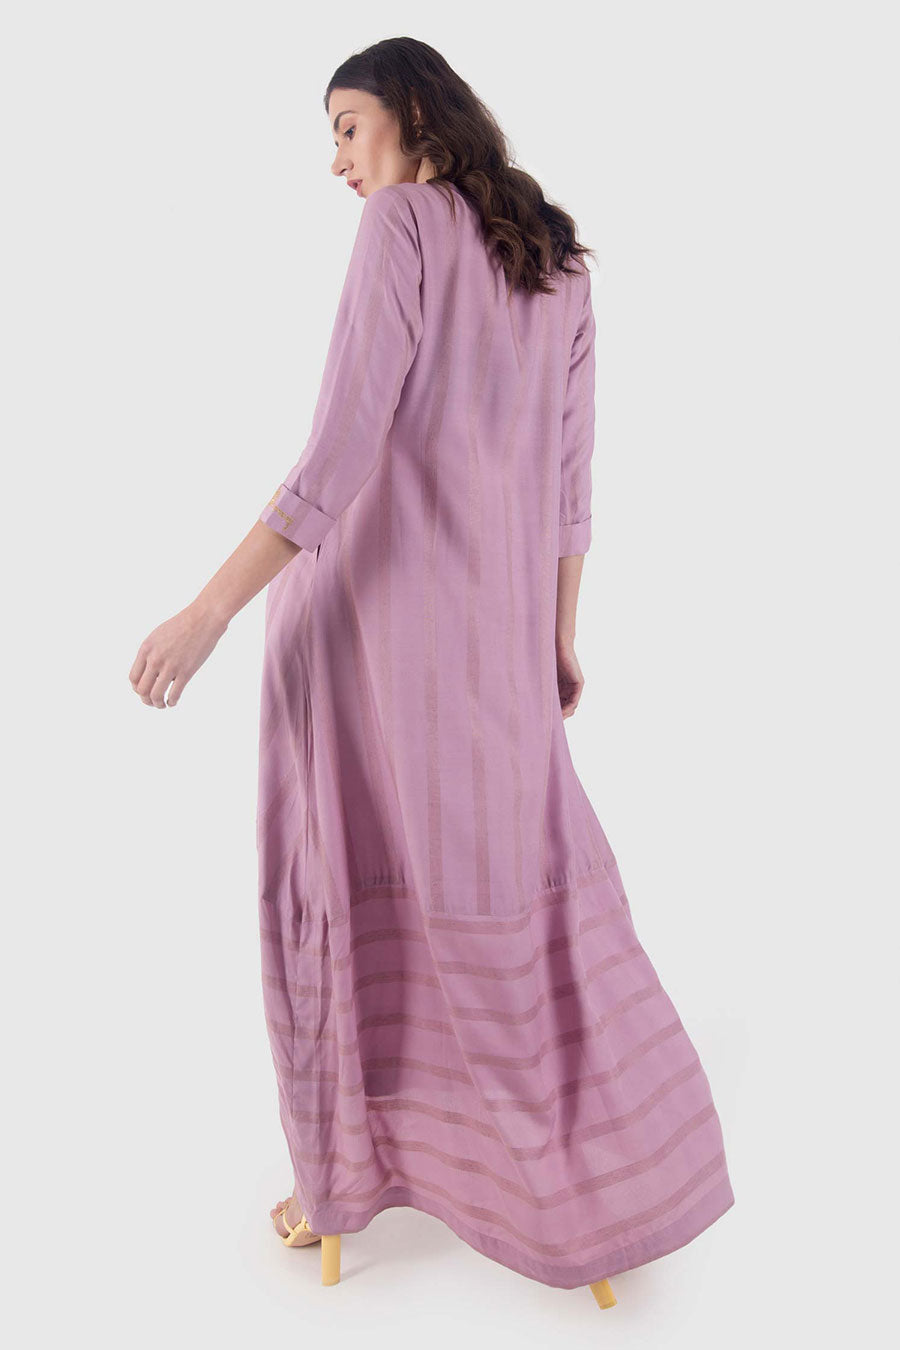 Periwinkle Lavender Dress